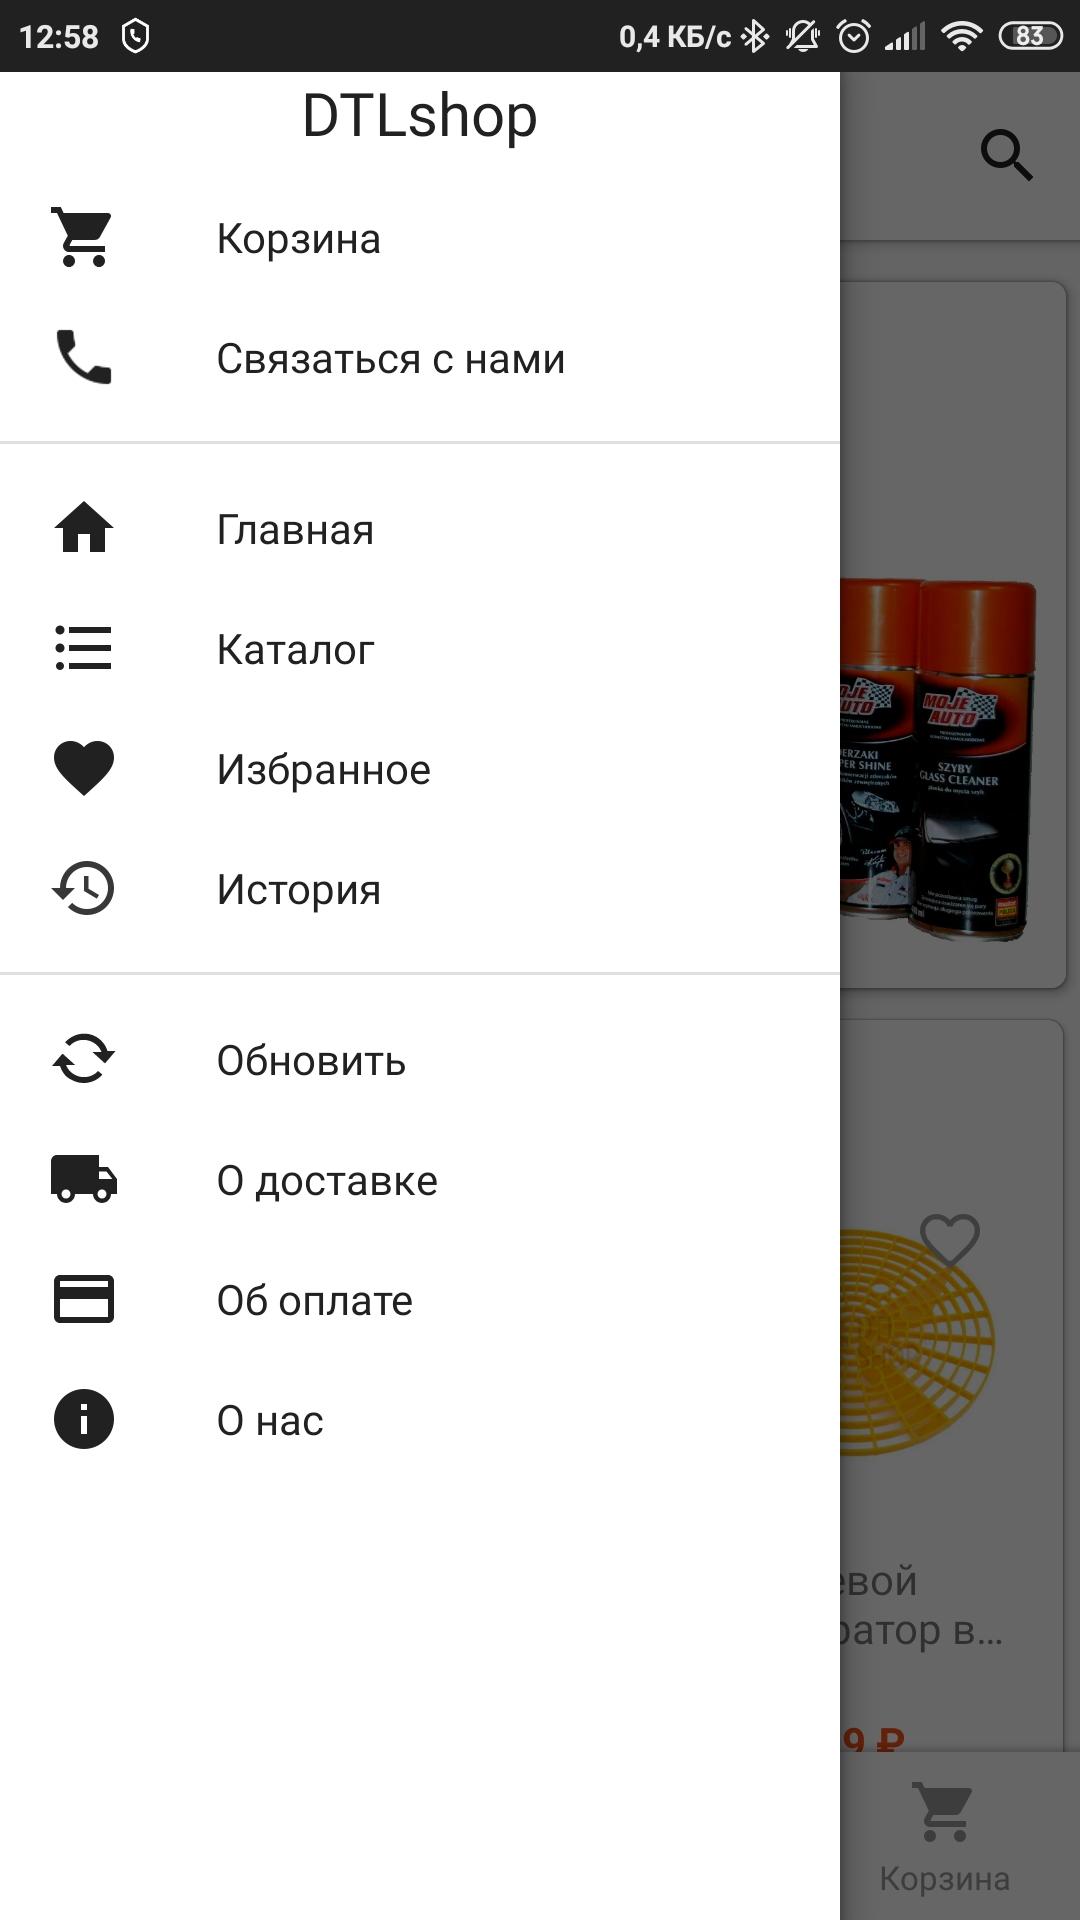 DTLshop.ru - detaling market 4.177.A.0 Screenshot 2